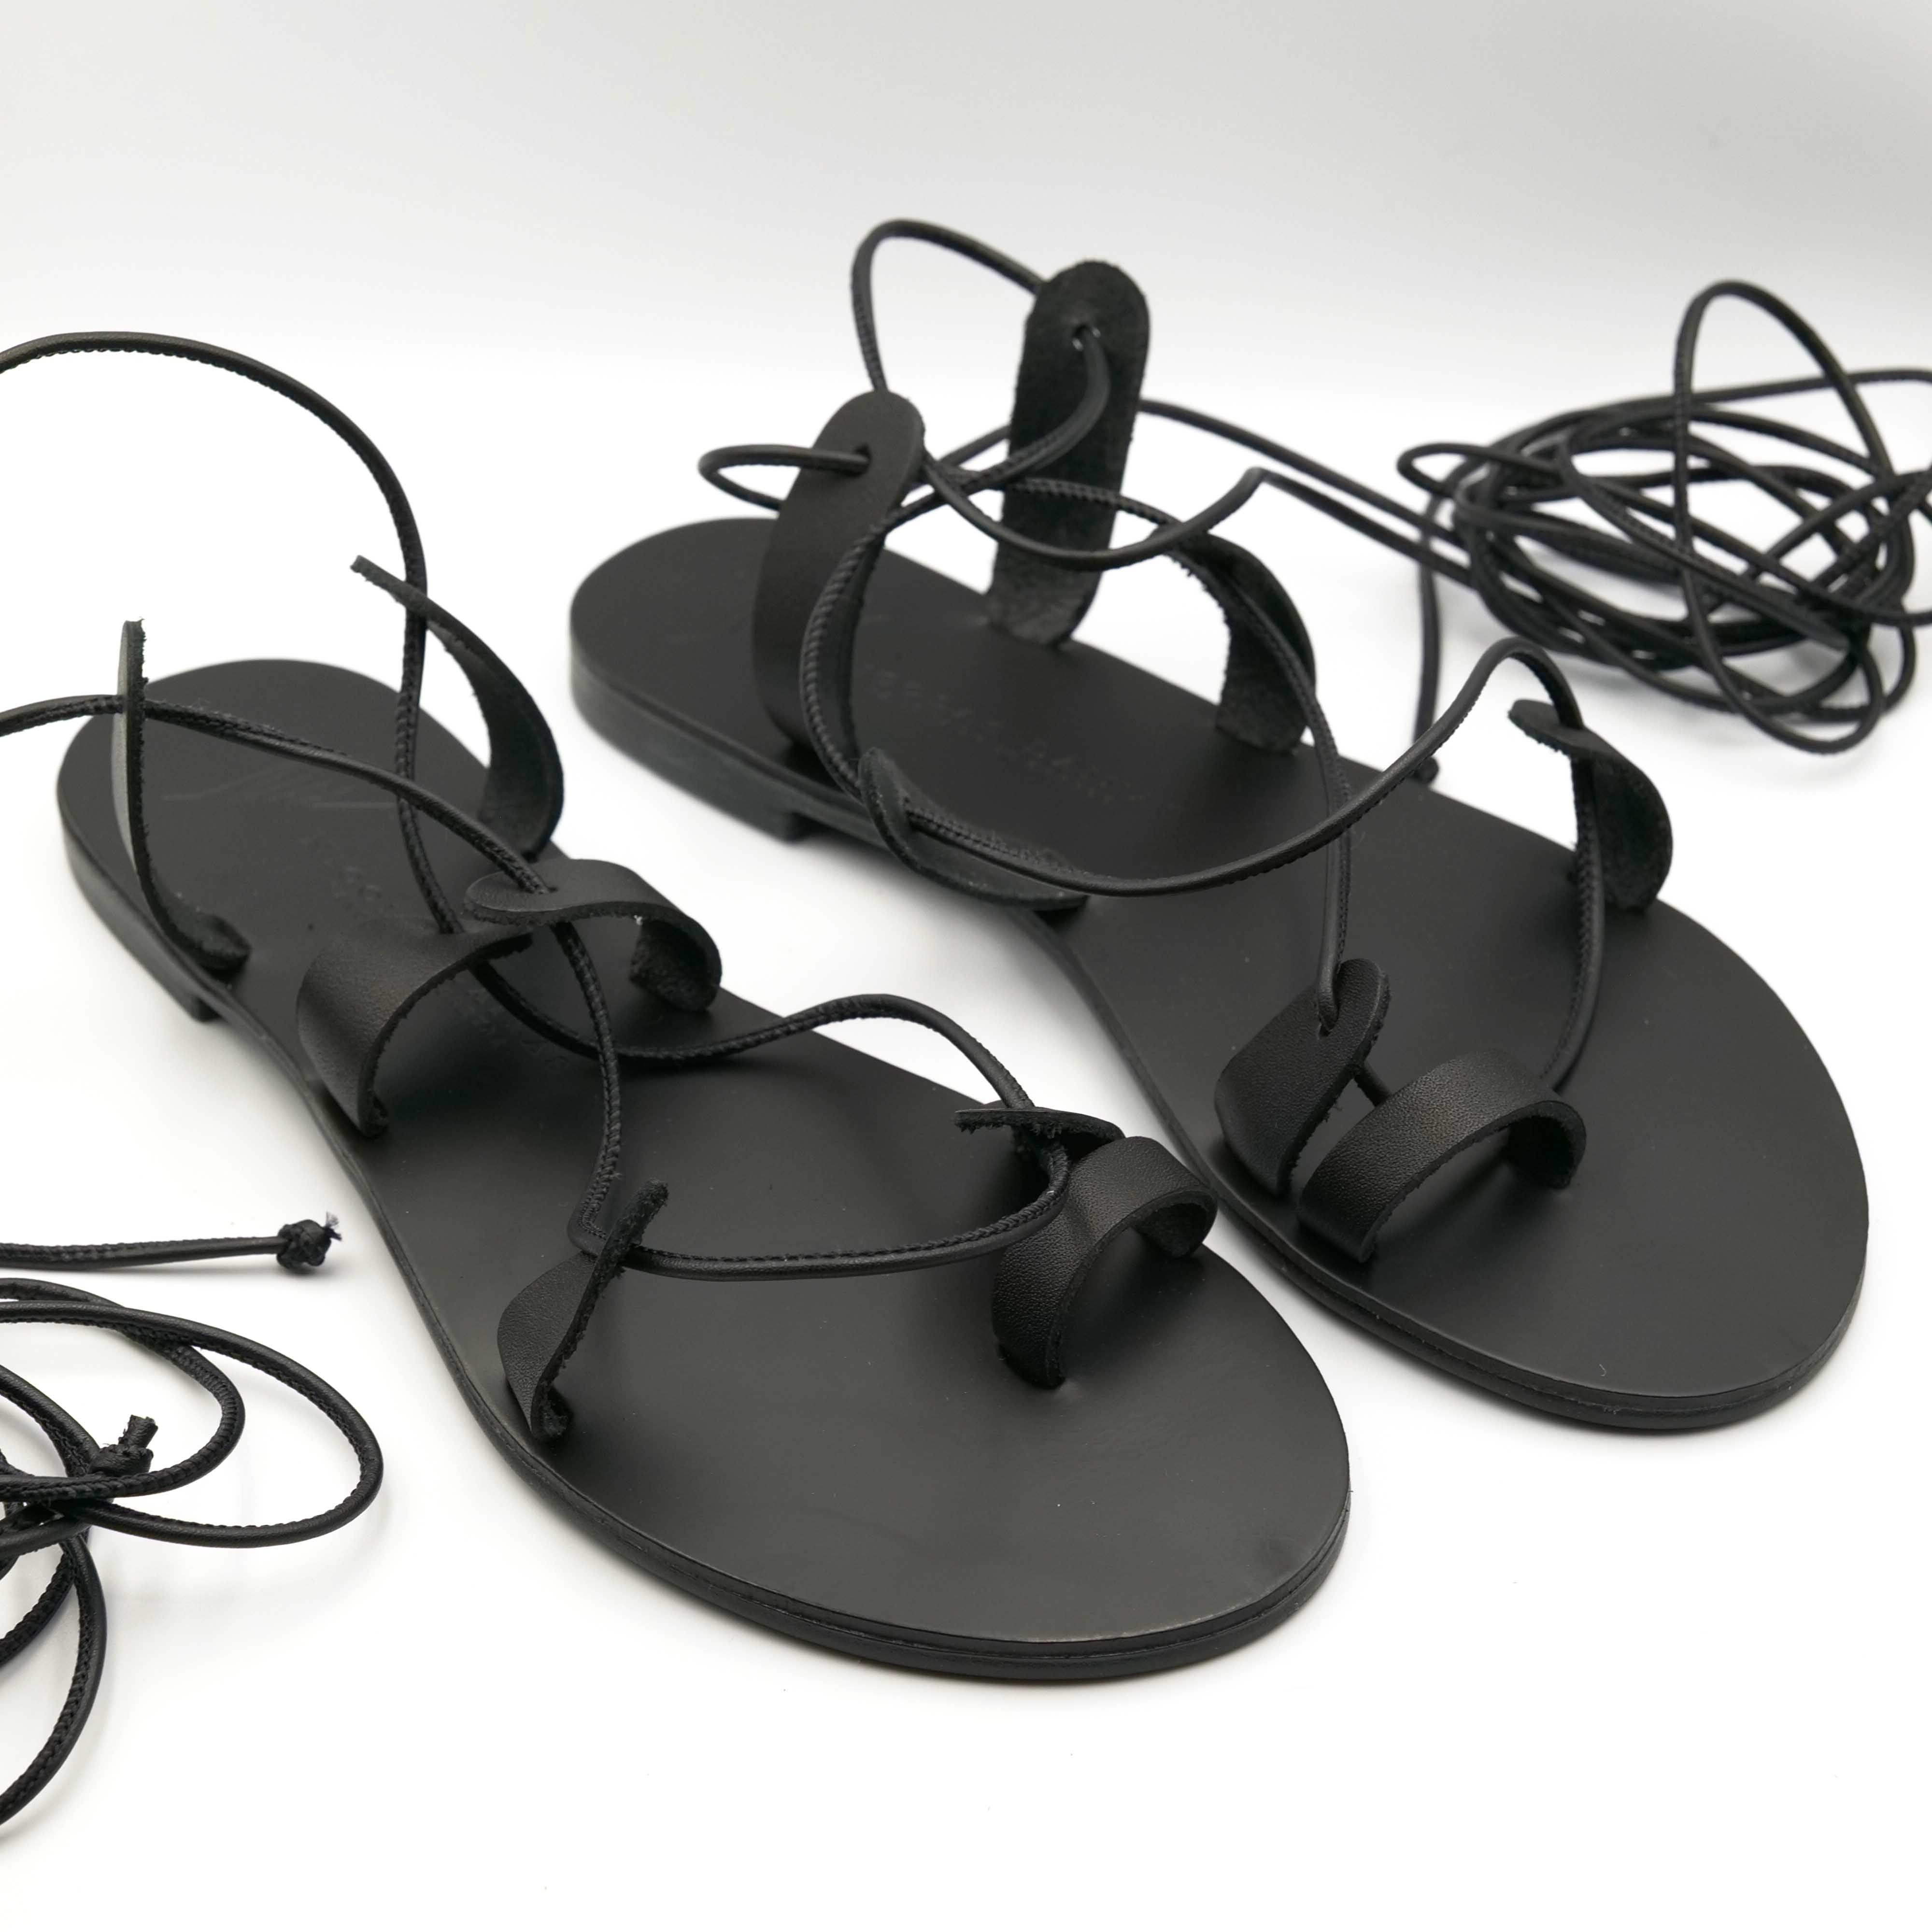 Sandaletti raso terra neri con  lacci regolabili Nicolas Lainas